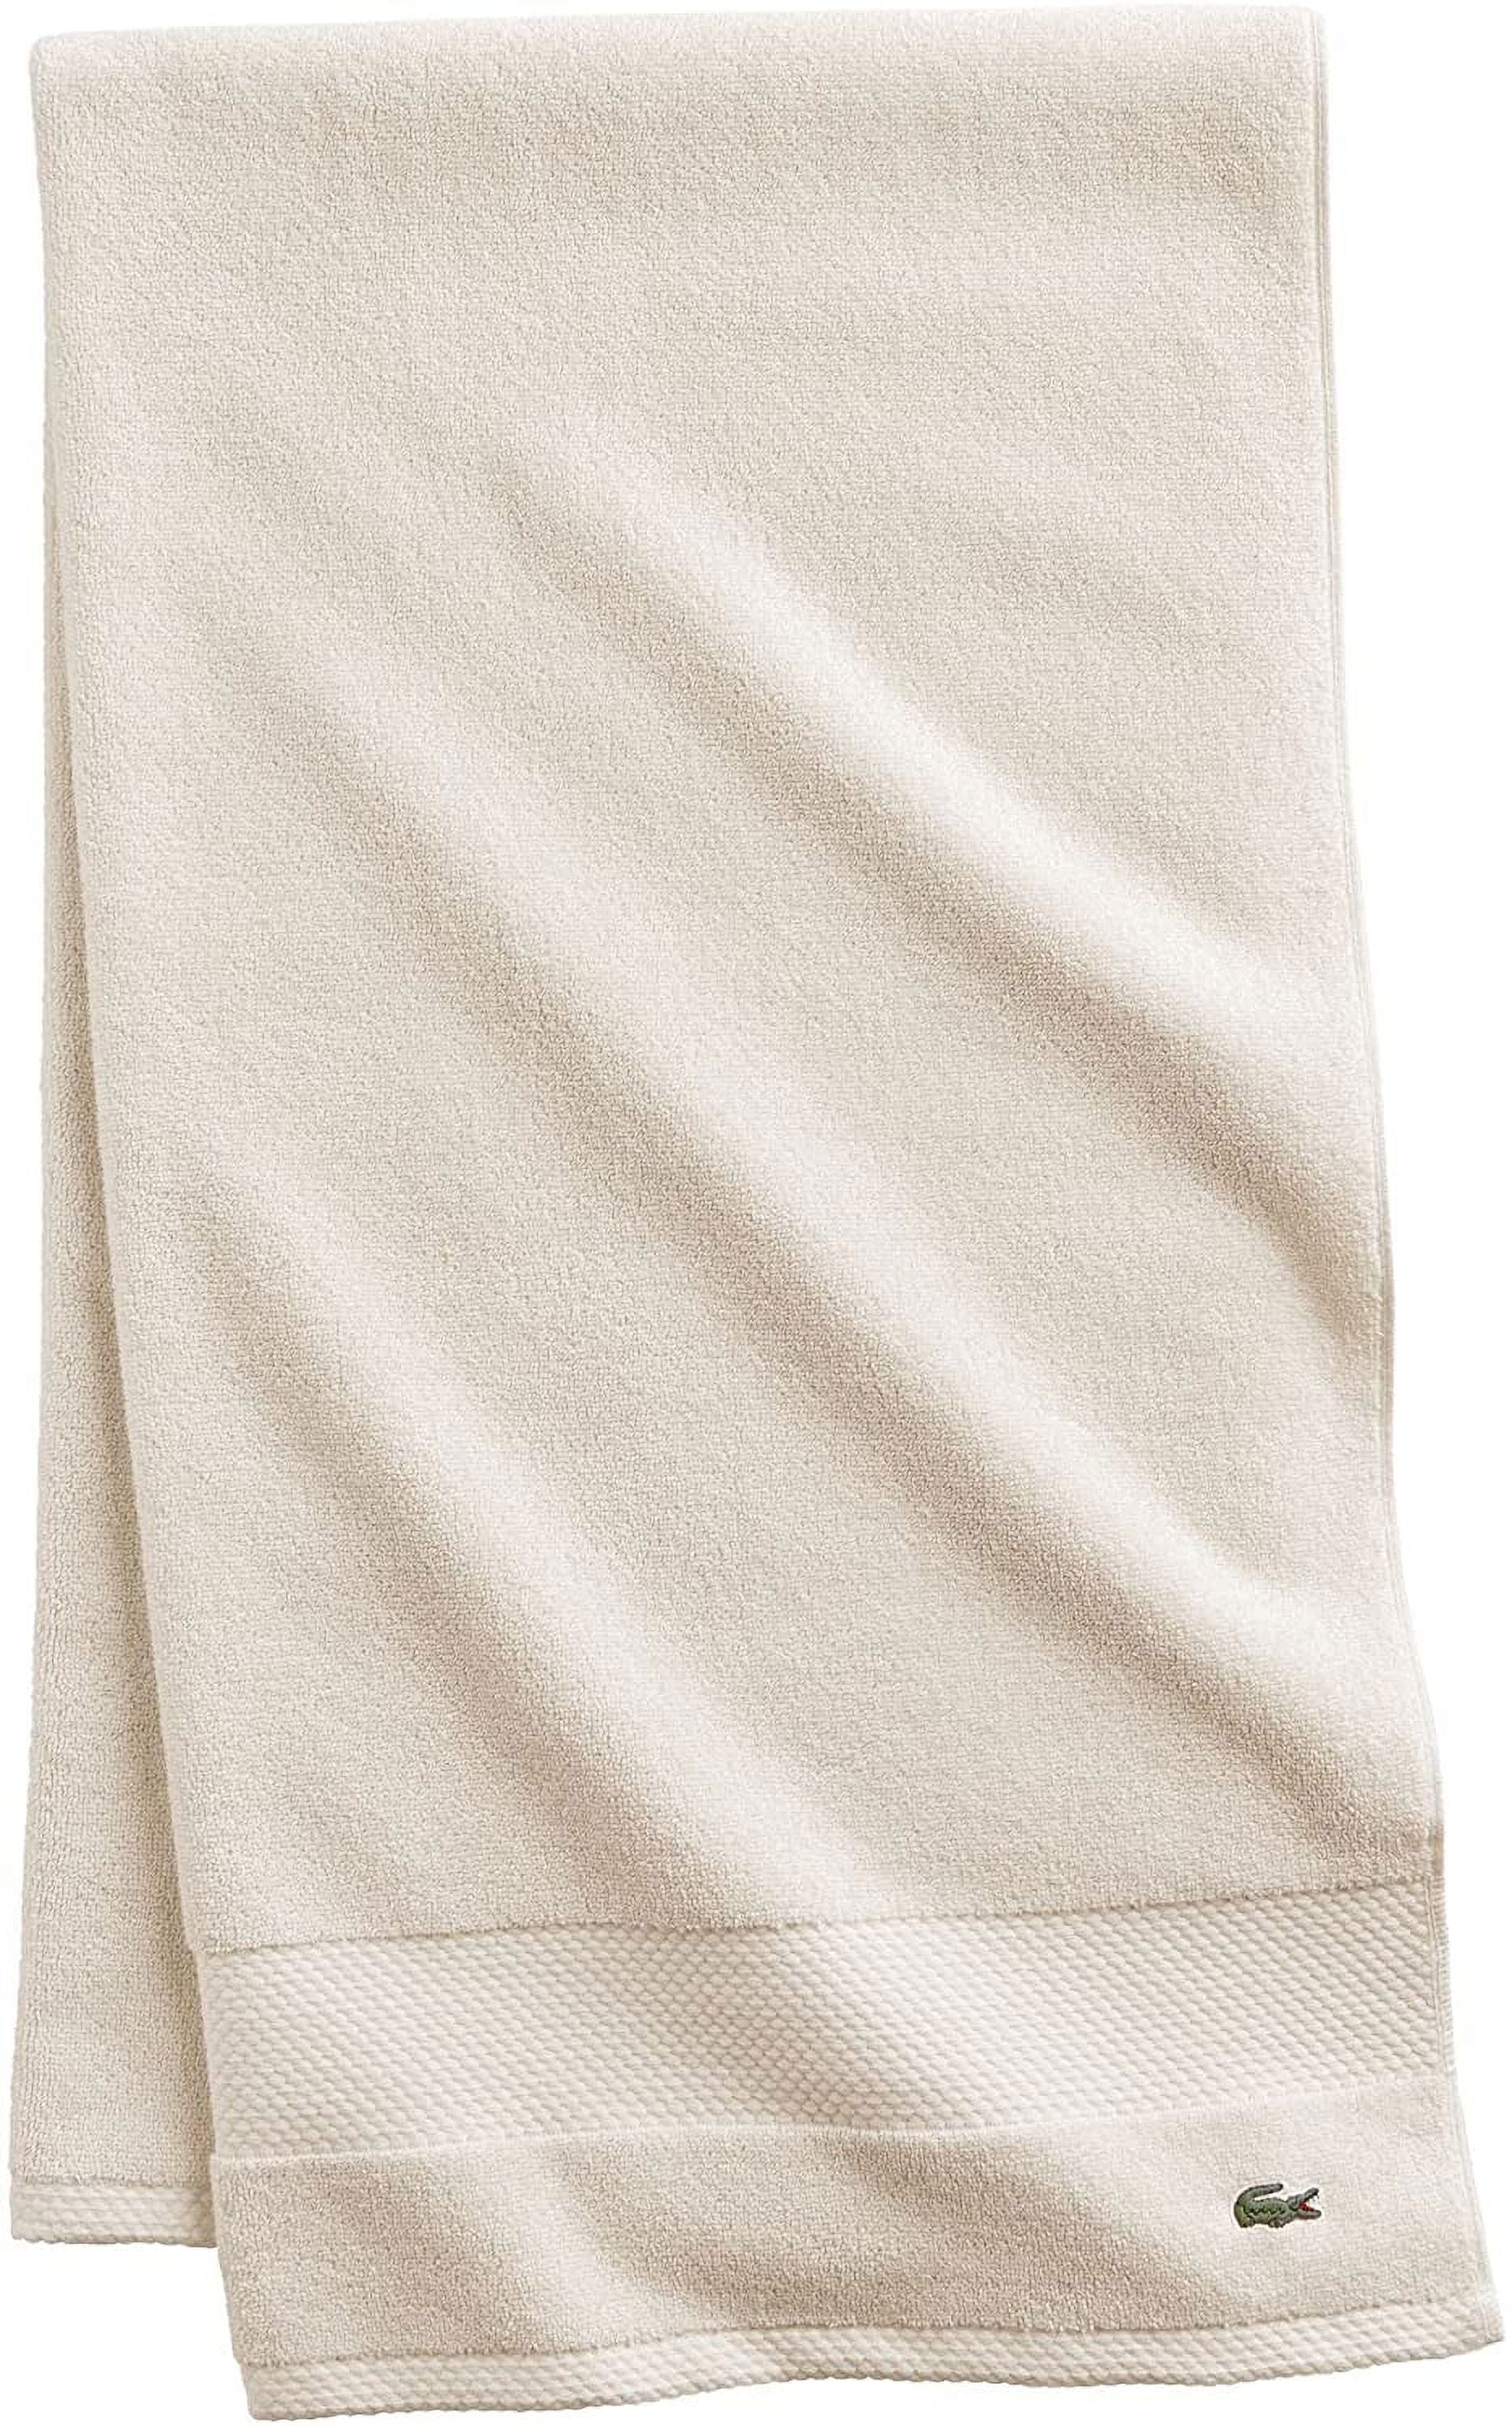 NWT Lacoste 30 x 52 Bath Towel Match Cotton Colorblocked Set of Two, Purple